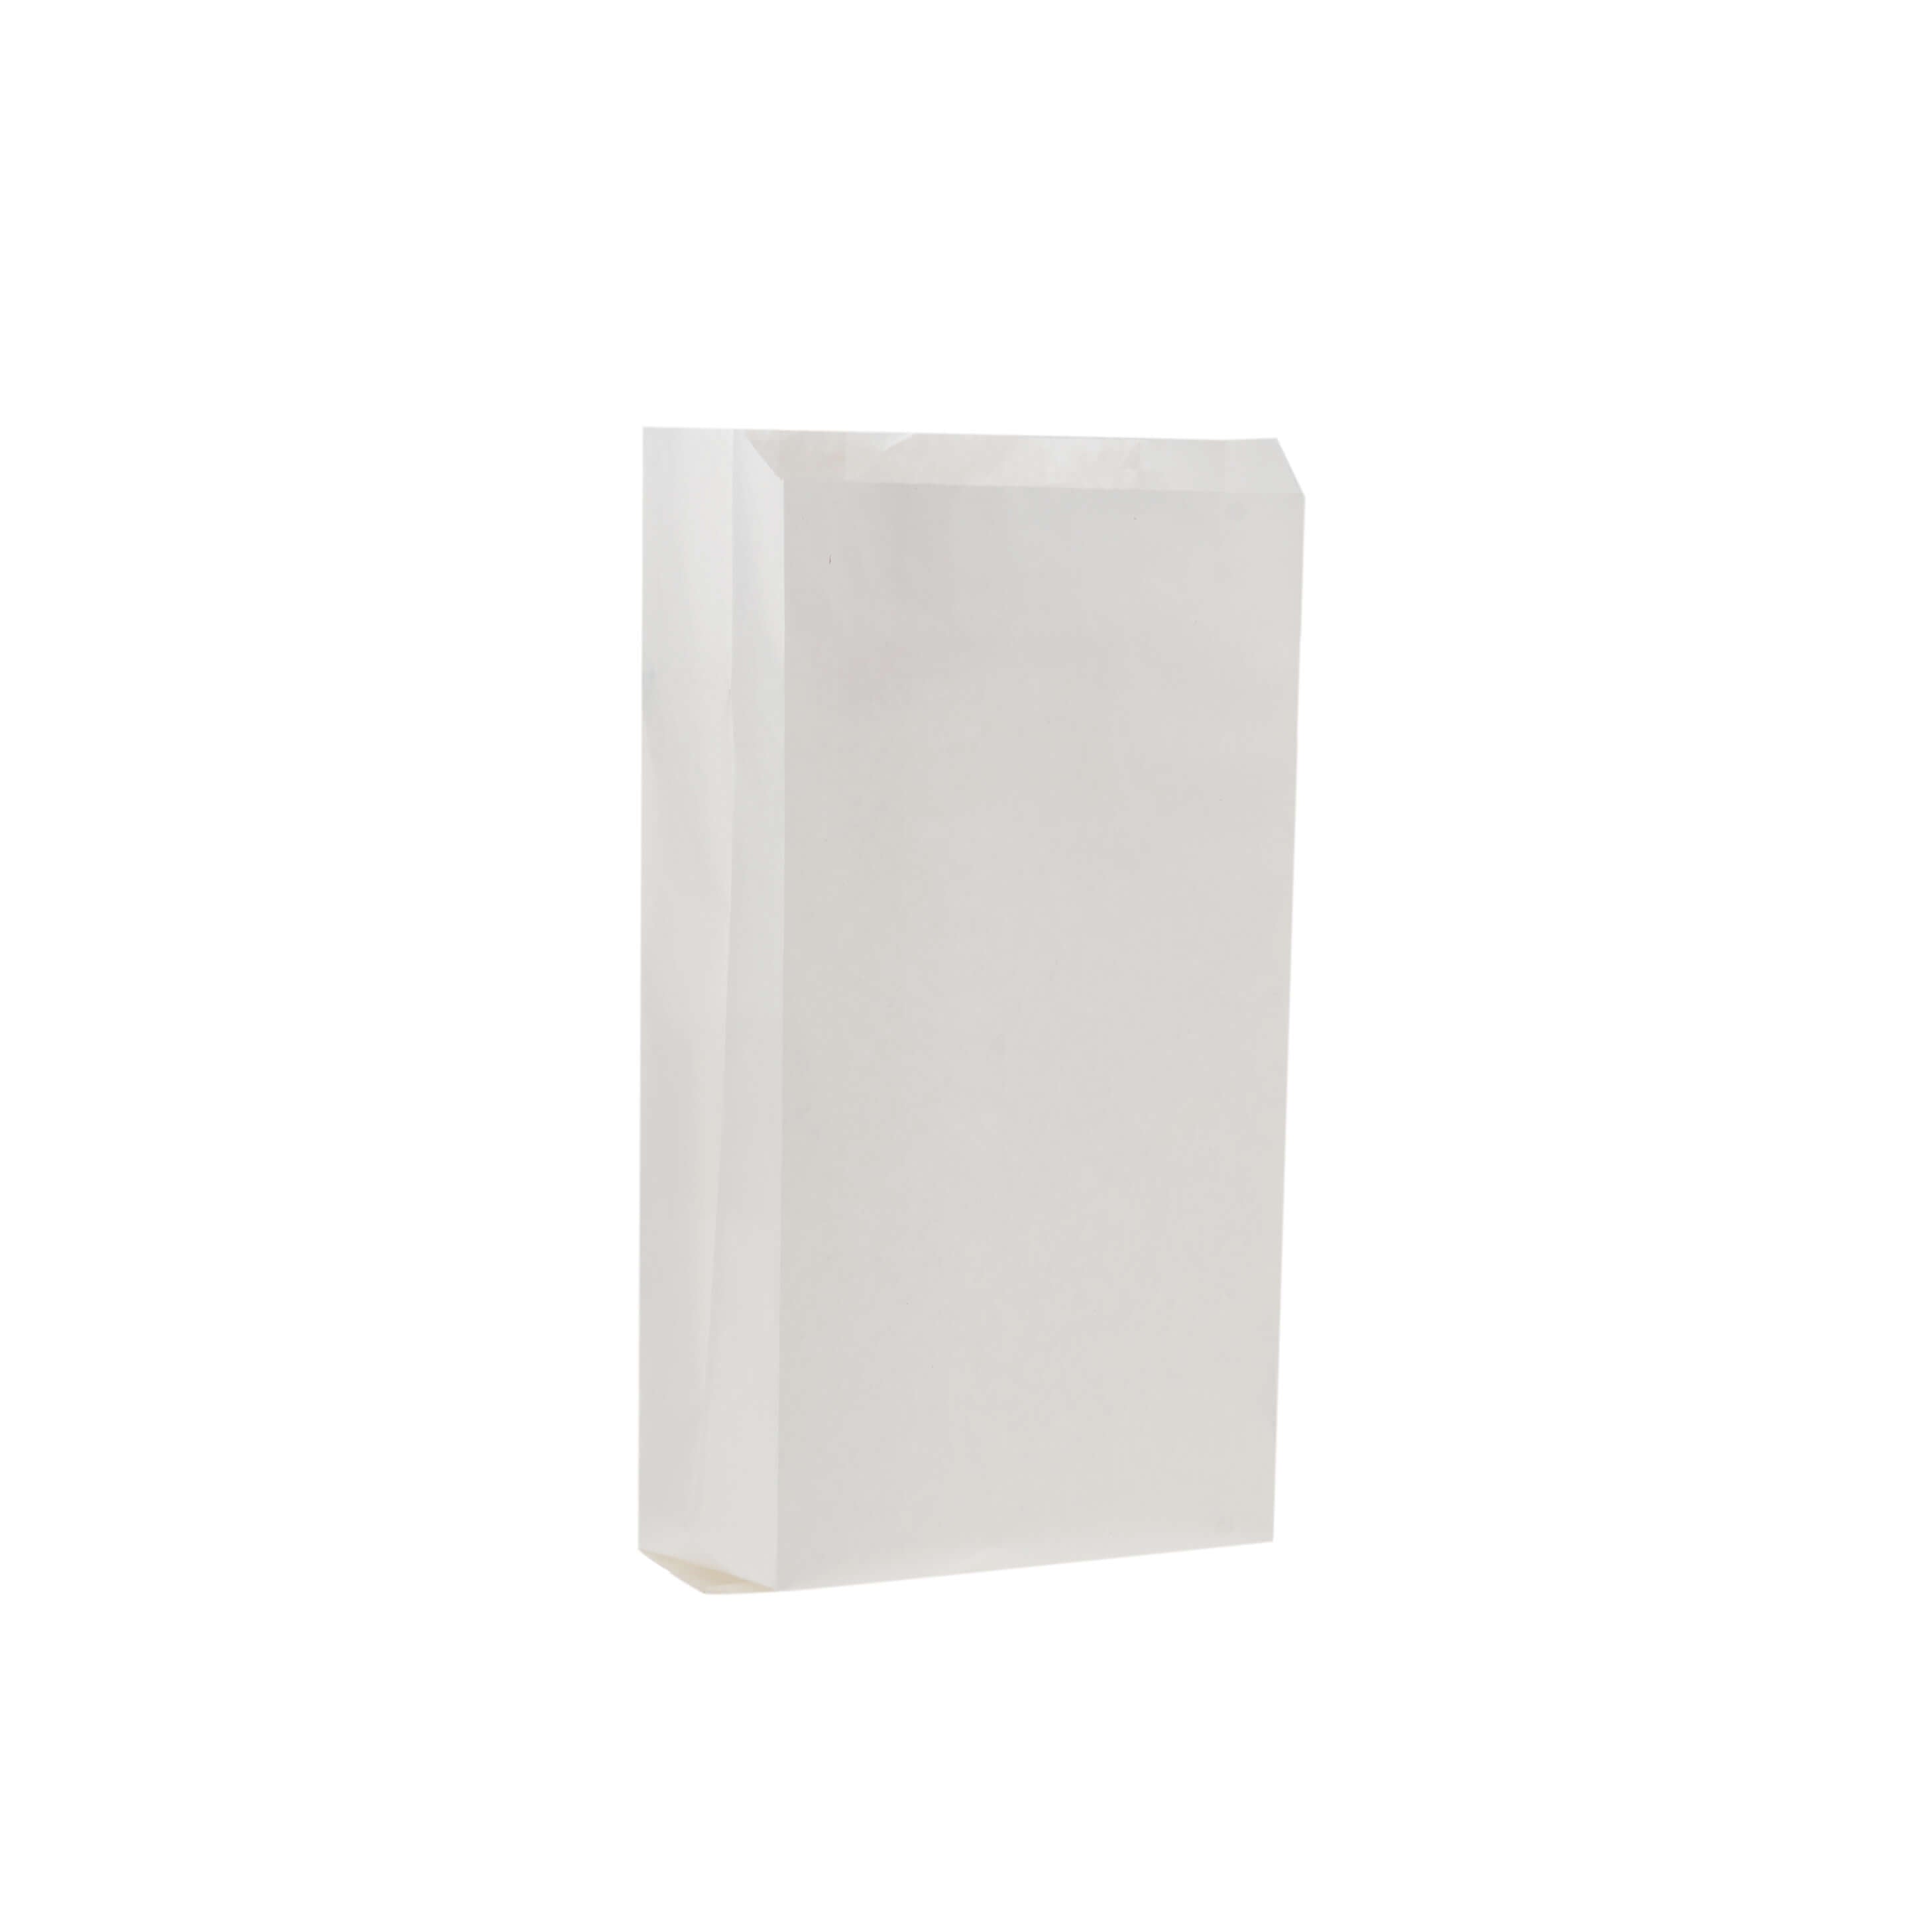 200x100x410 mm No.3 Pinch or flat bottom paper bag white - Hotpack Global